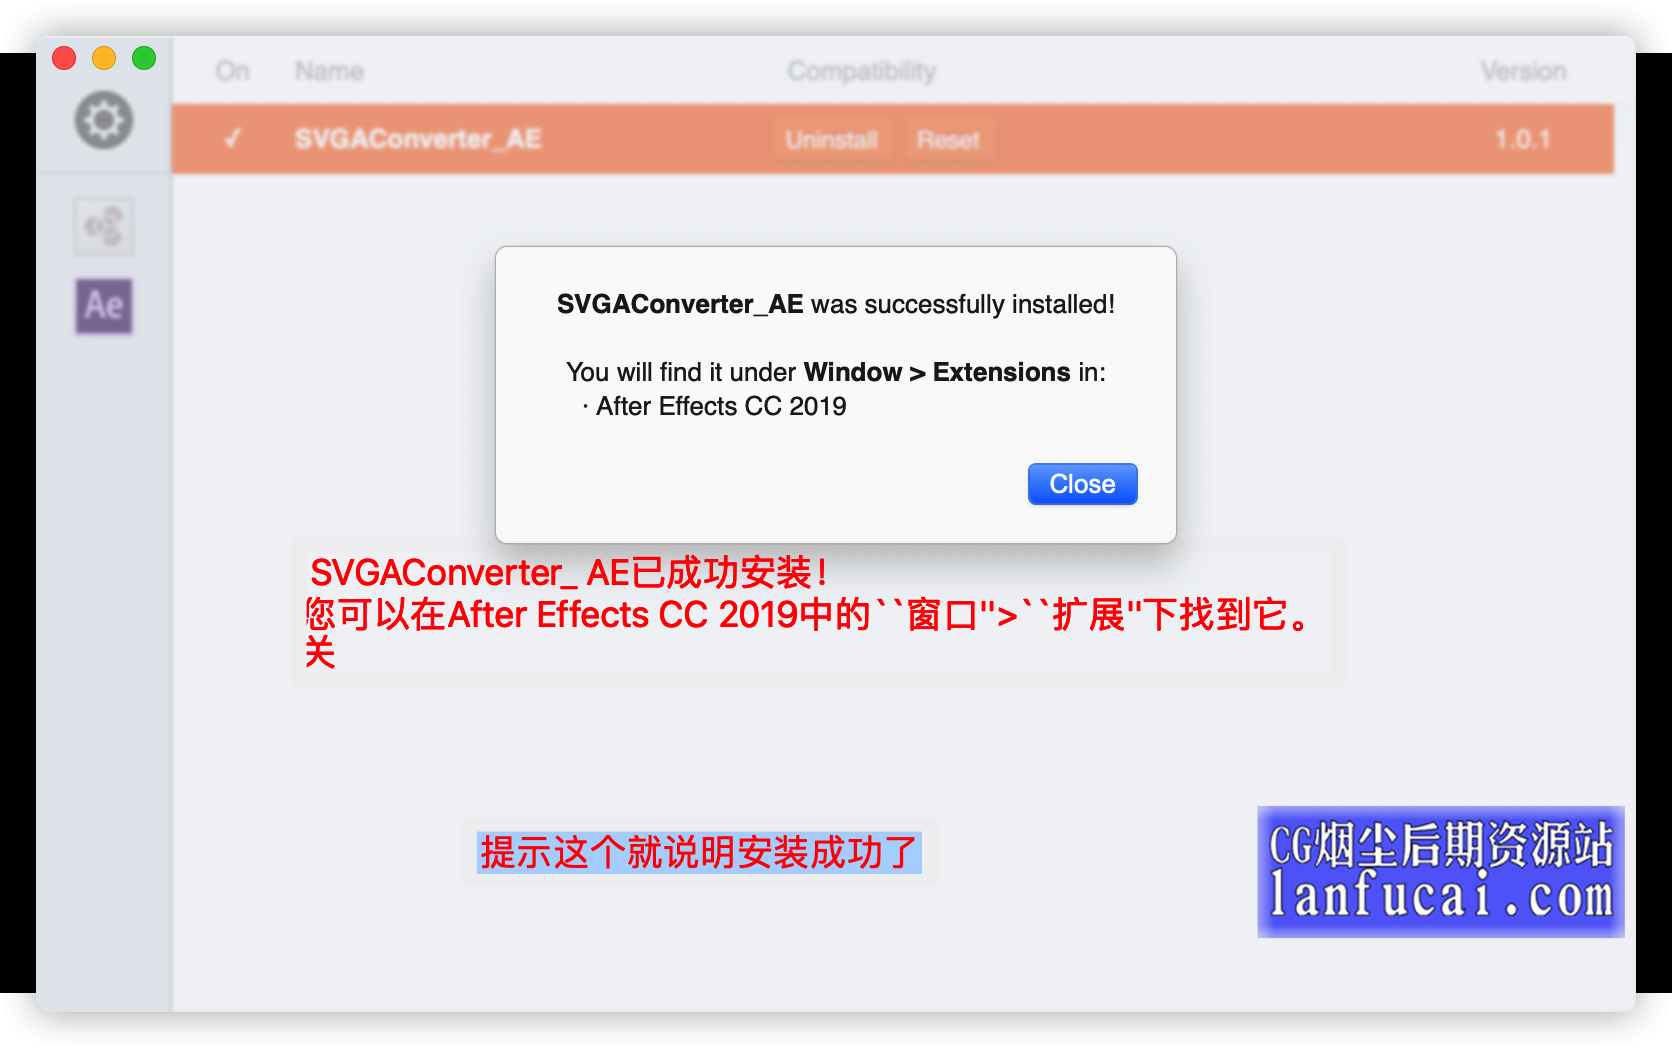 SVGAConverter_ AE已成功安装！您可以在After Effects CC 2019中的``窗口''>``扩展''下找到它